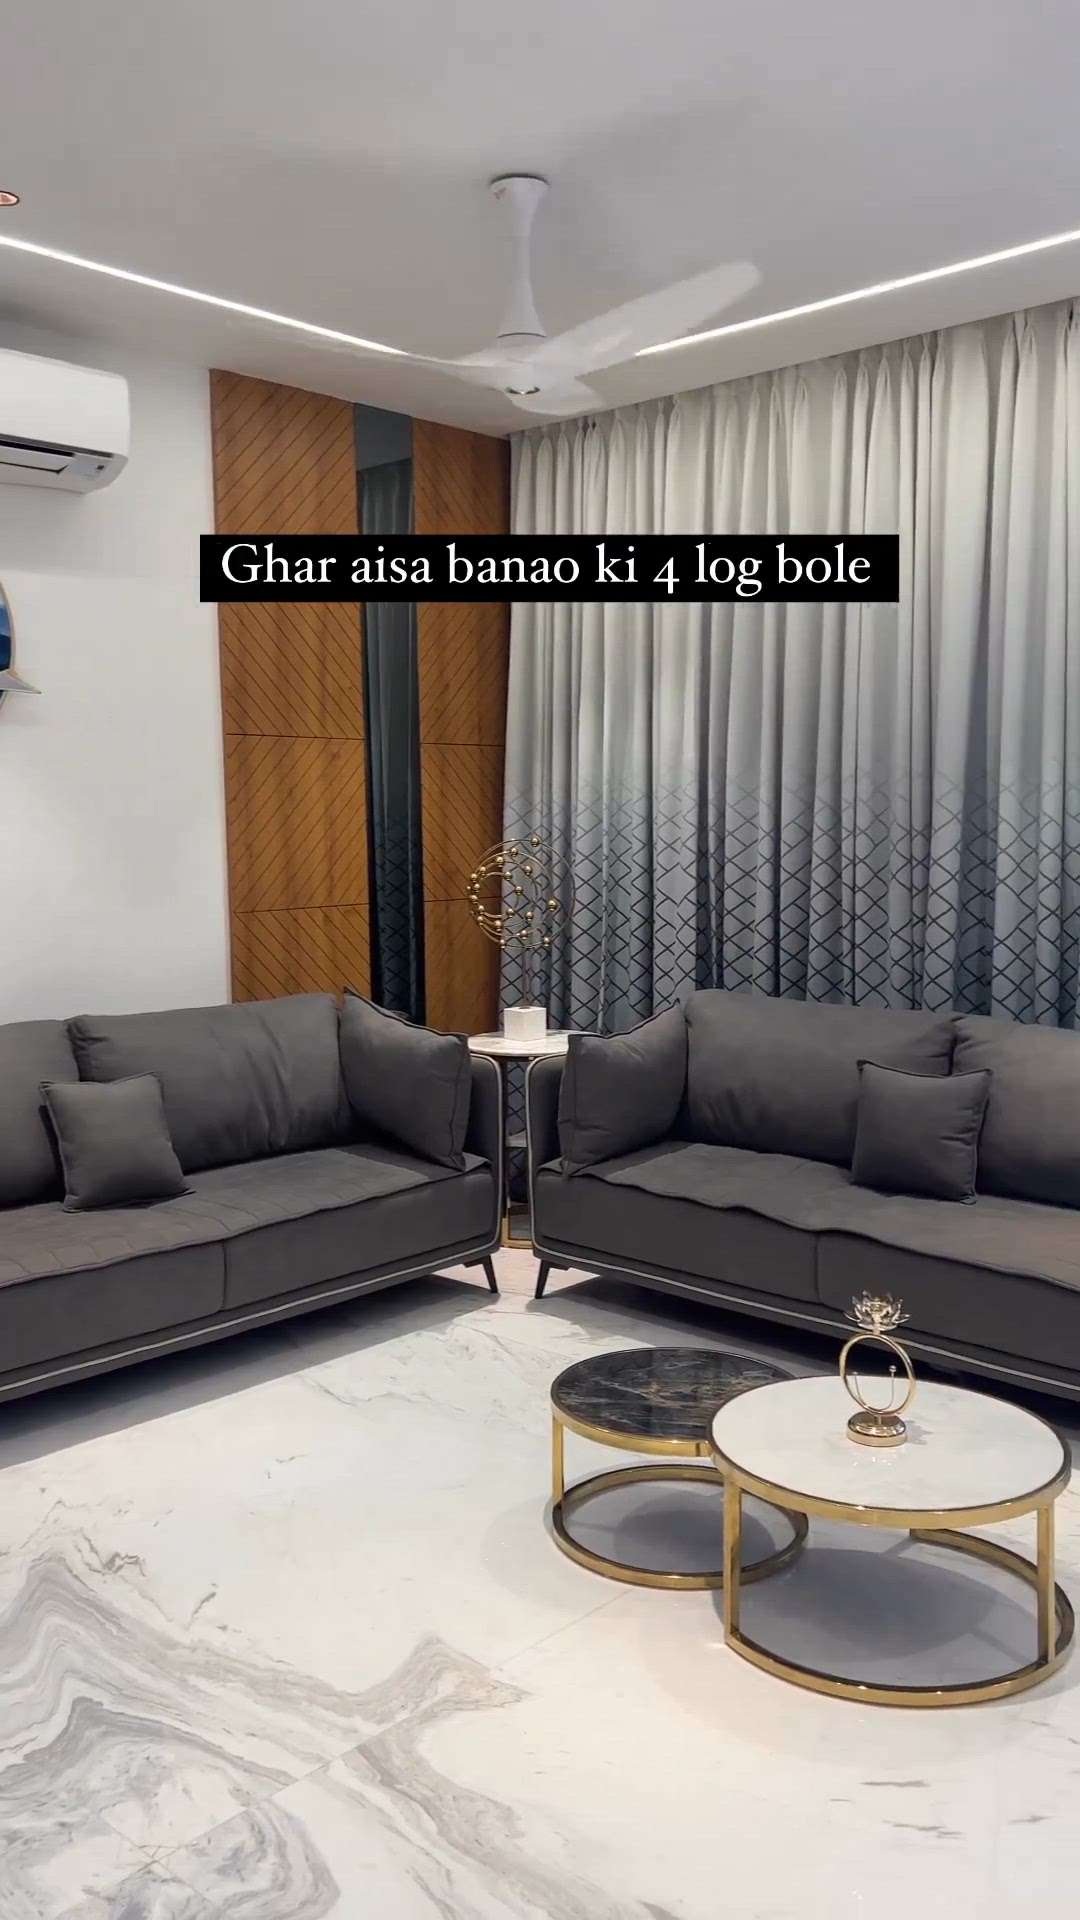 Samjhe 😁
.
.
Contact For More Info Aur Aaj He Design Karao
.
.
#InteriorDesigner #LivingroomDesigns #HomeDecor #livingdesign #LivingRoomDecors #Furnishings